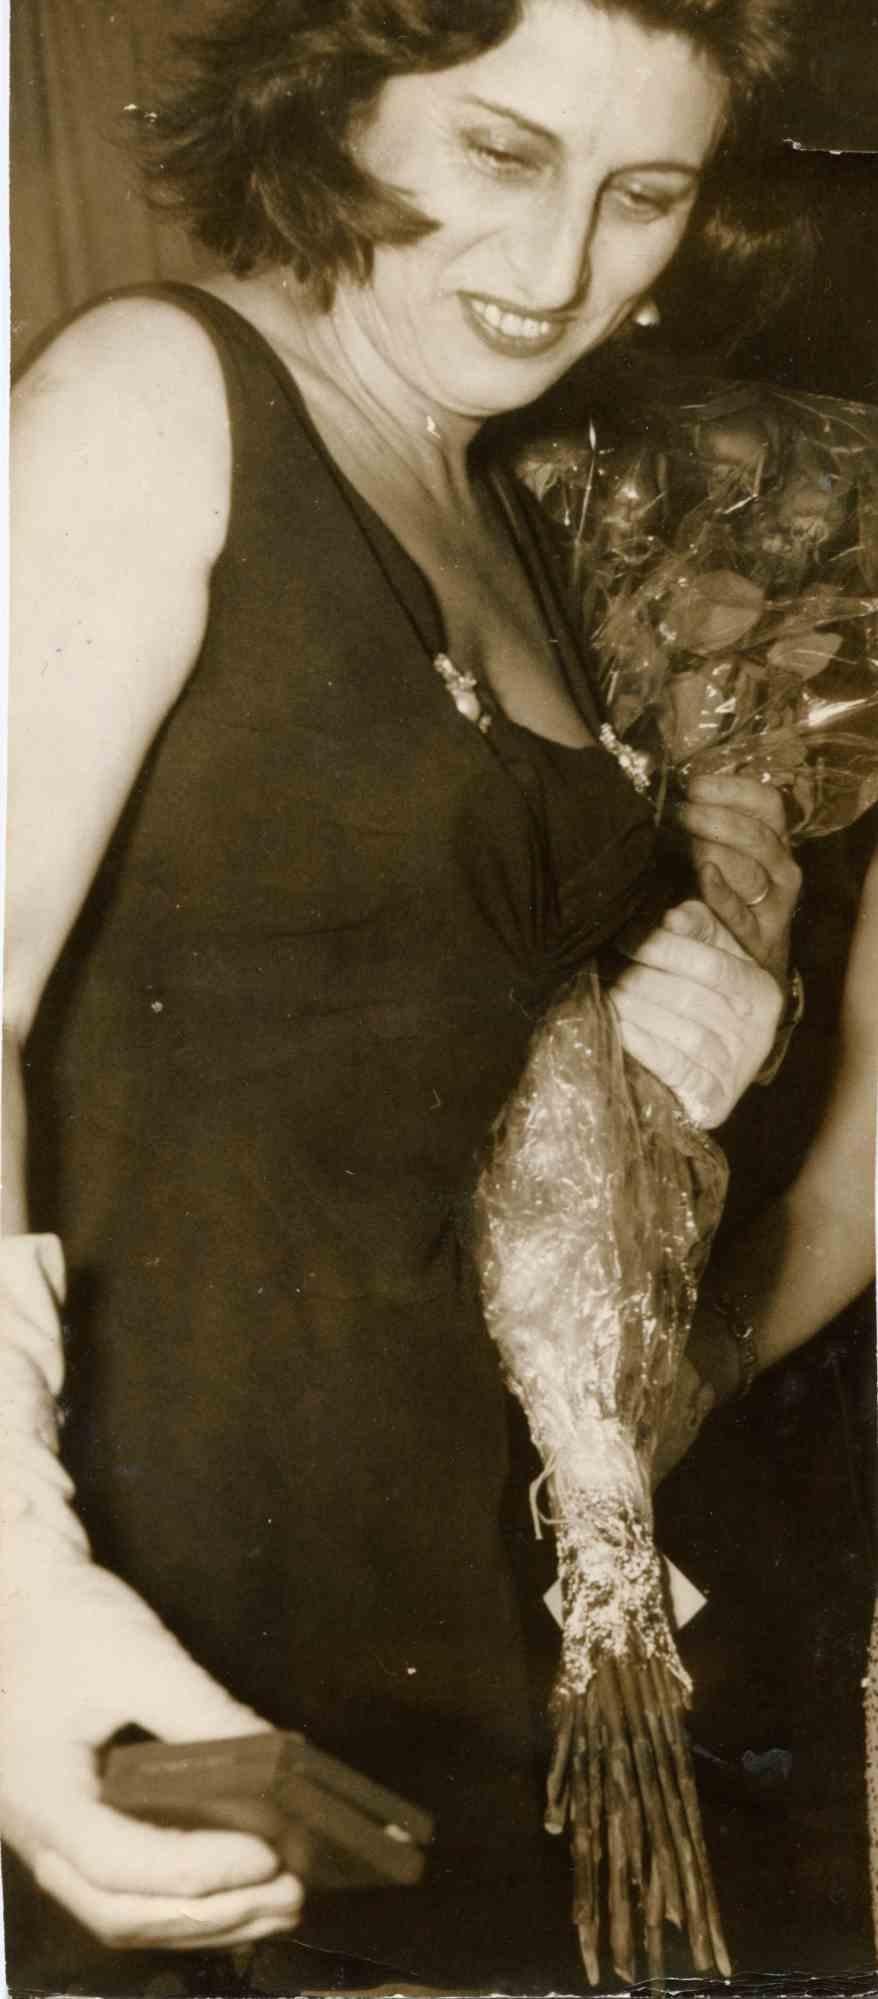 Unknown Portrait Photograph - Portrait of Anna Magnani - Vintage B/W photo - Mid 20th Century